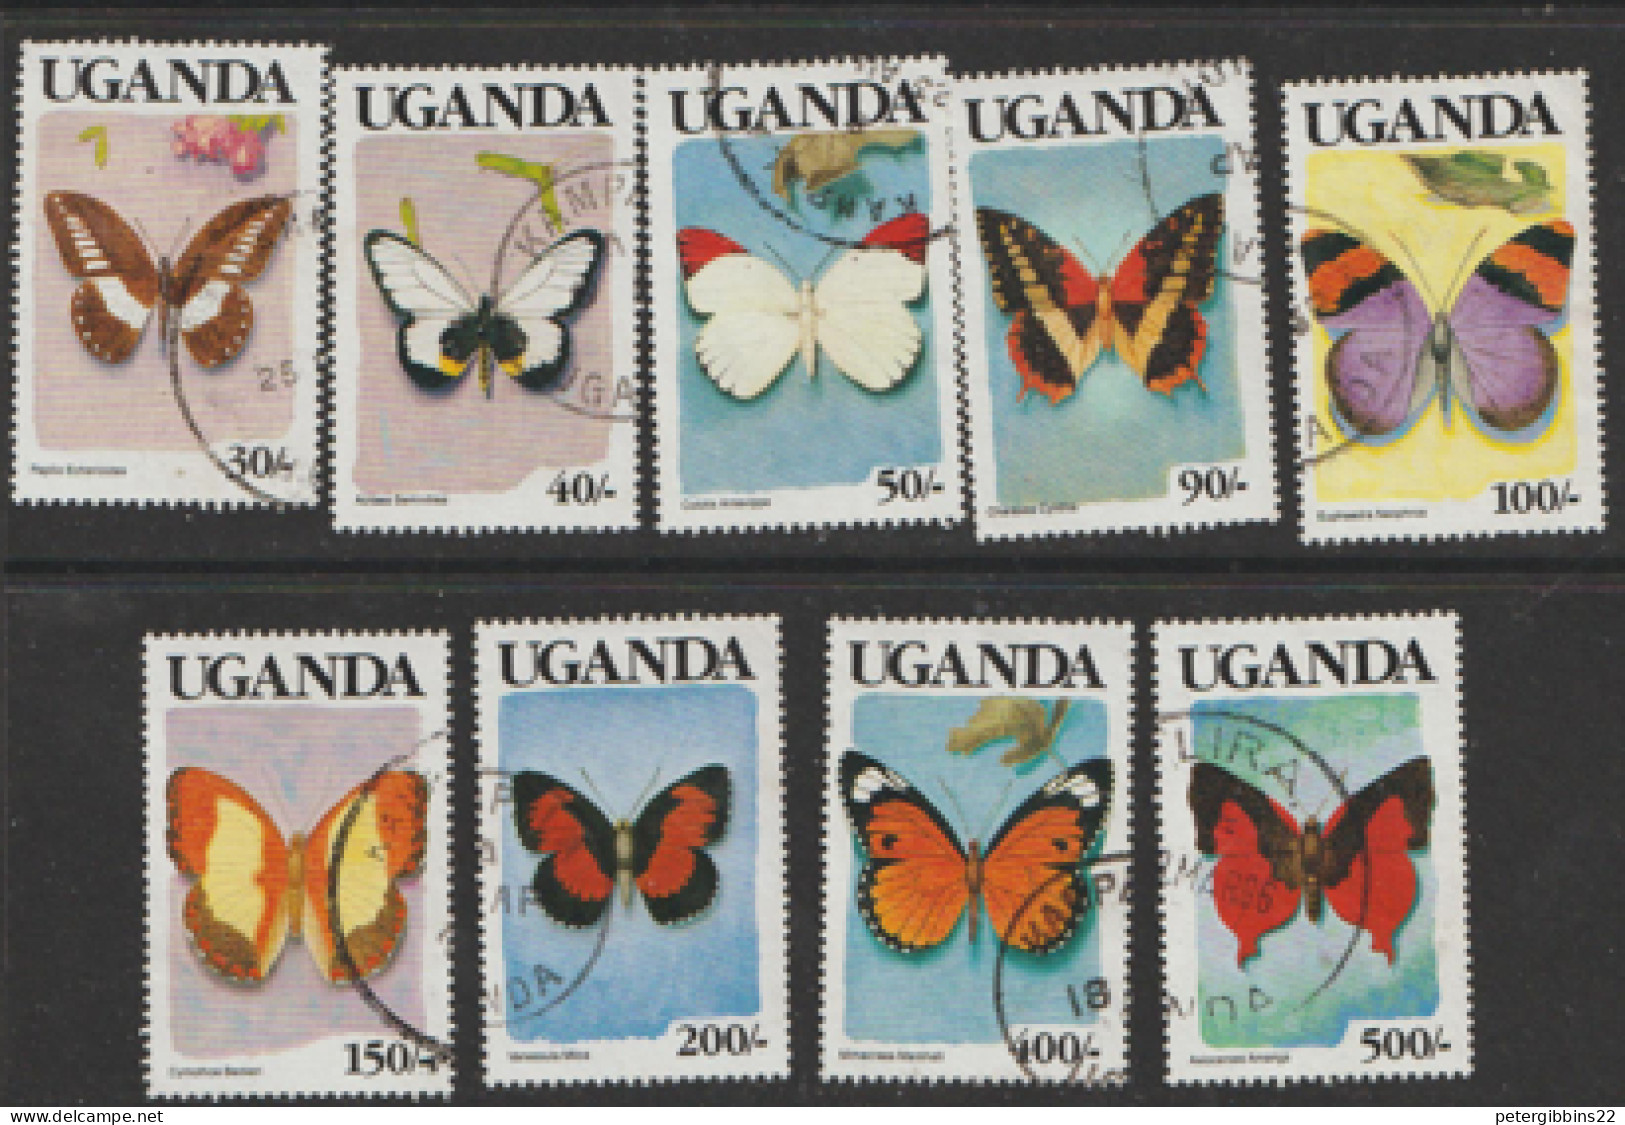 Uganda  1989  Butterflies  Various Values  Fine Used - Uganda (1962-...)